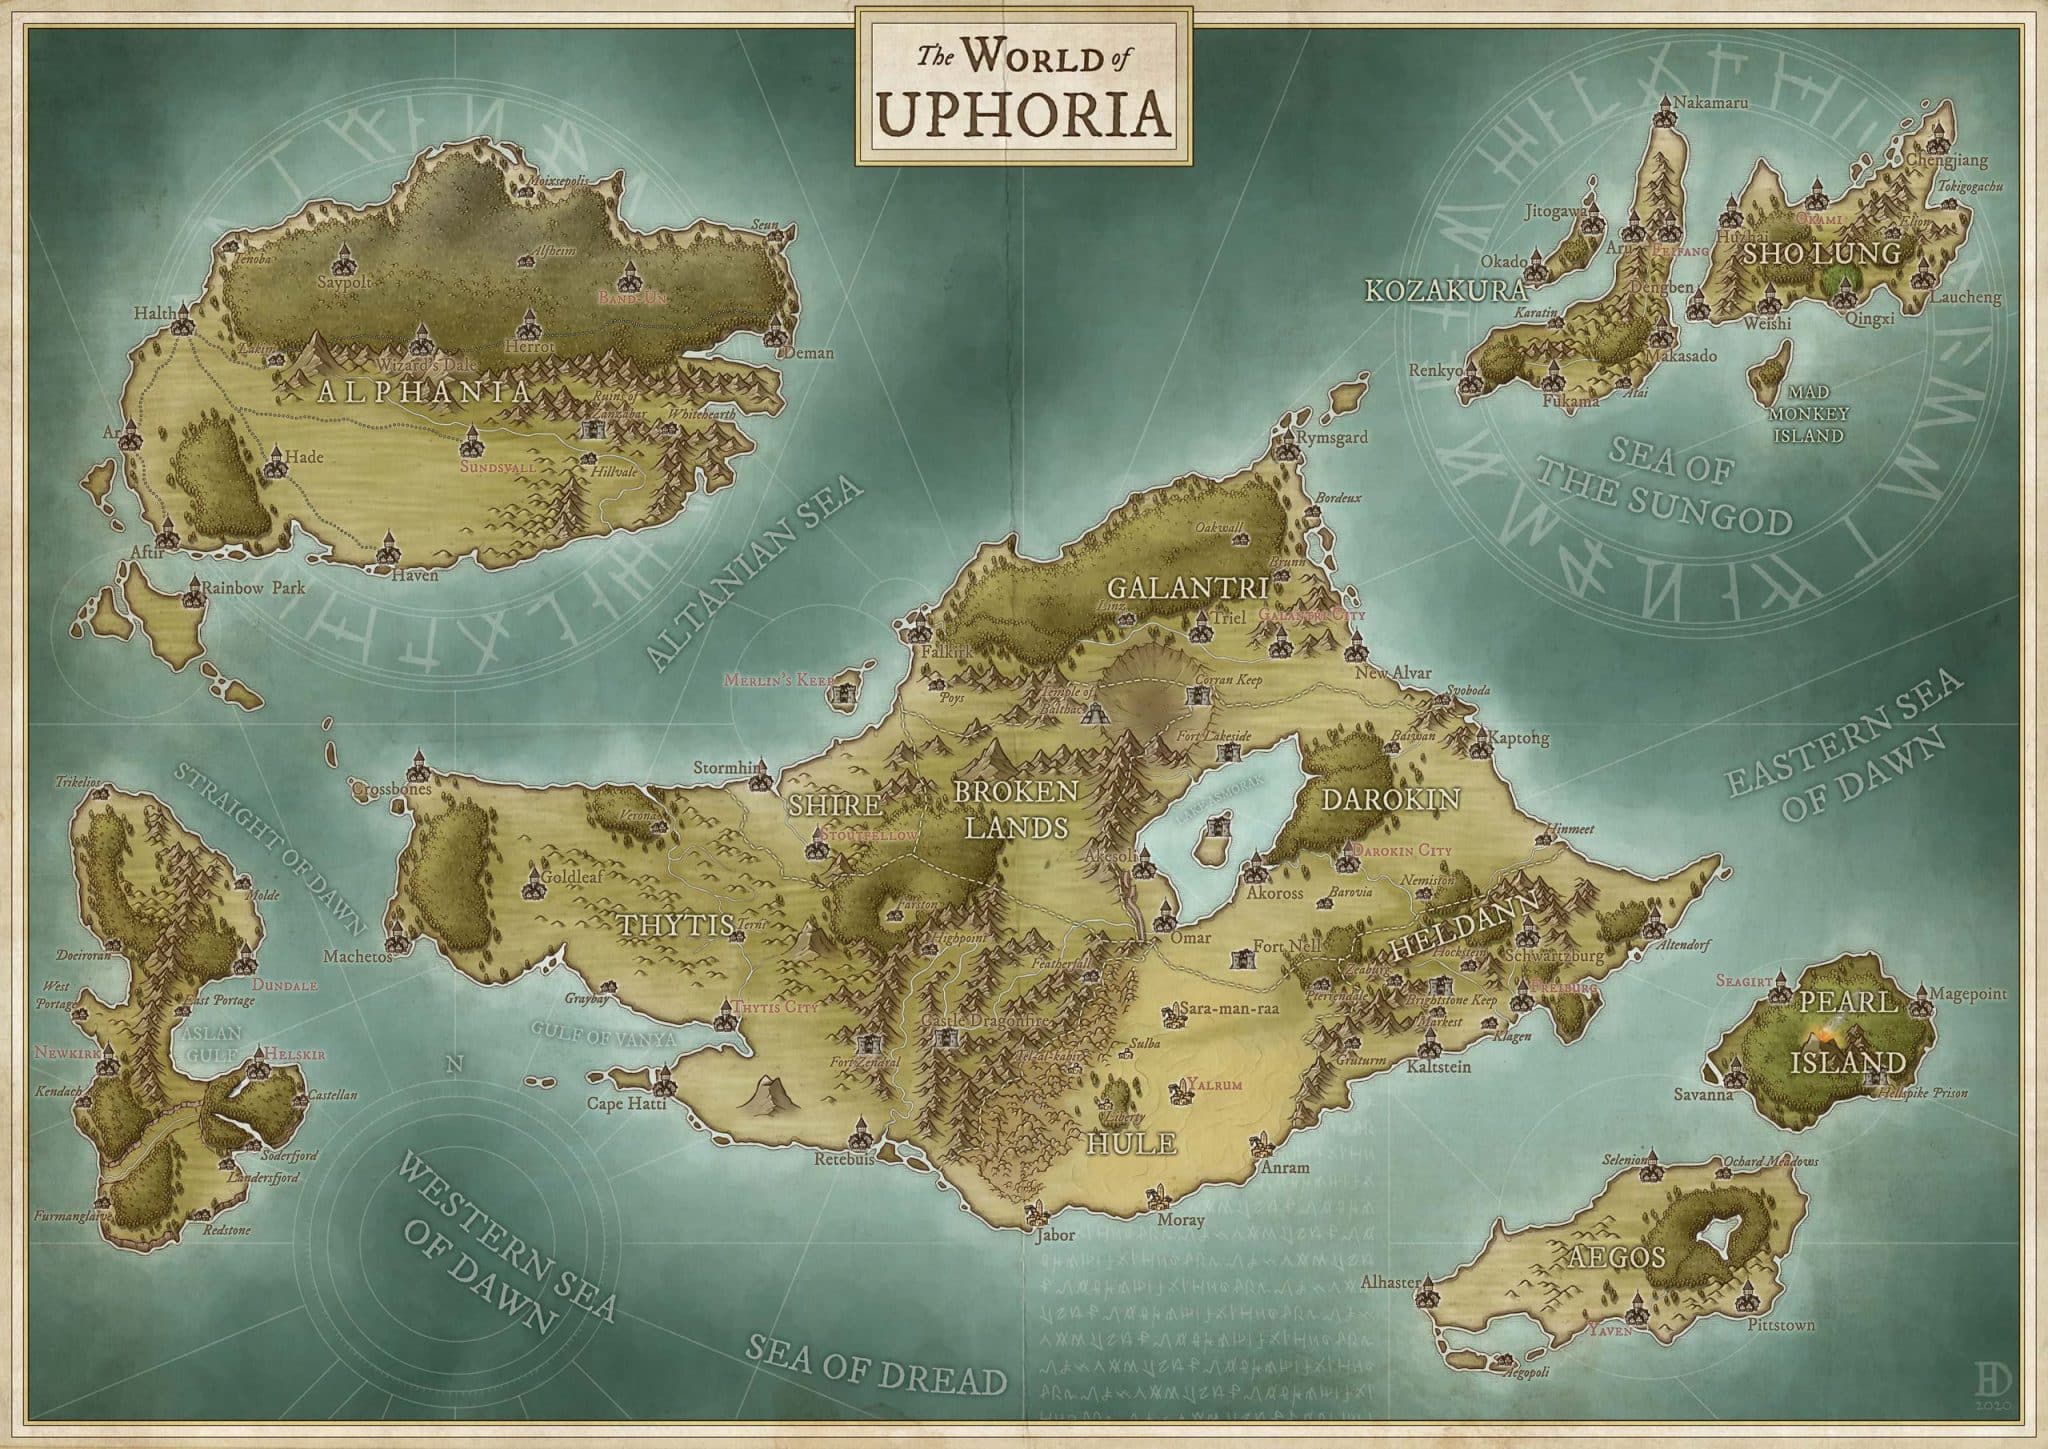 uphoria fantasy map with islands